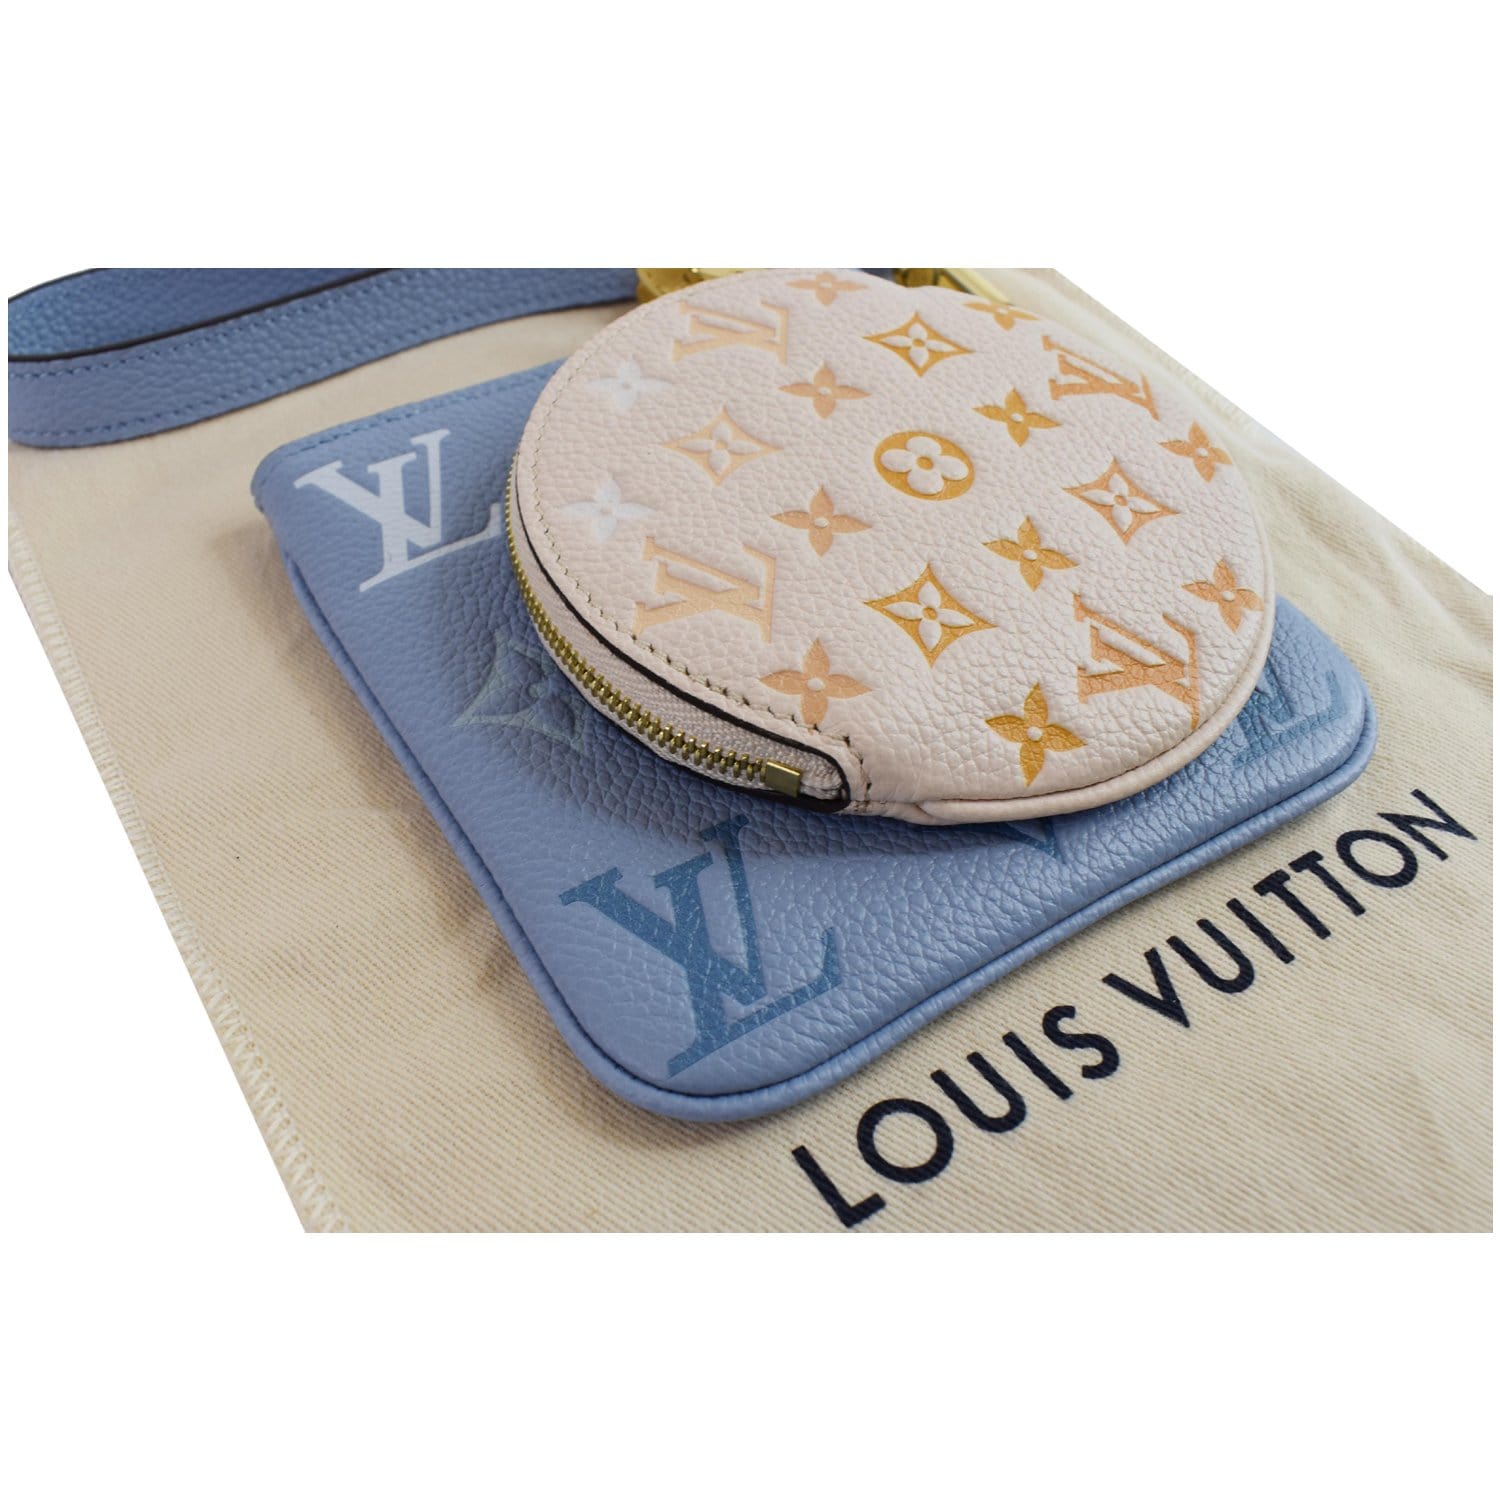 Summer Bundle Monogram Empreinte Leather - Handbags